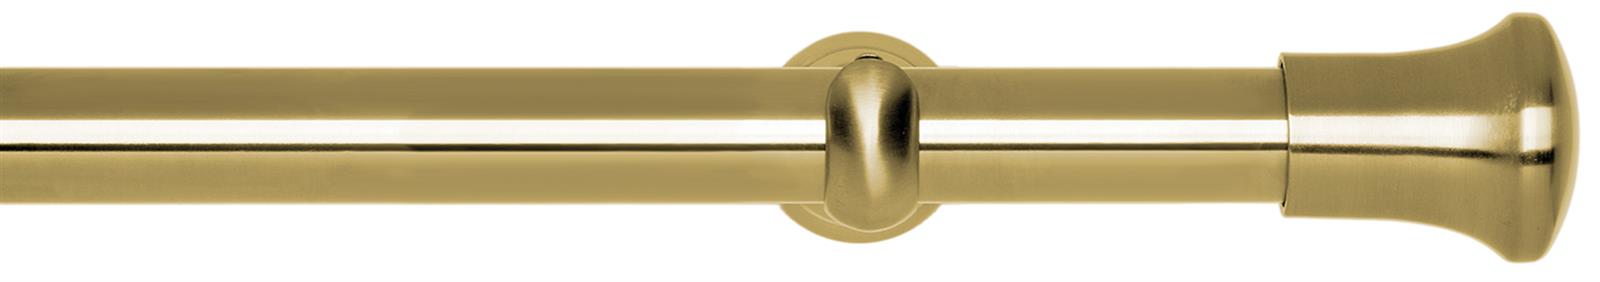 Neo 28mm Eyelet Pole Spun Brass Cup Trumpet